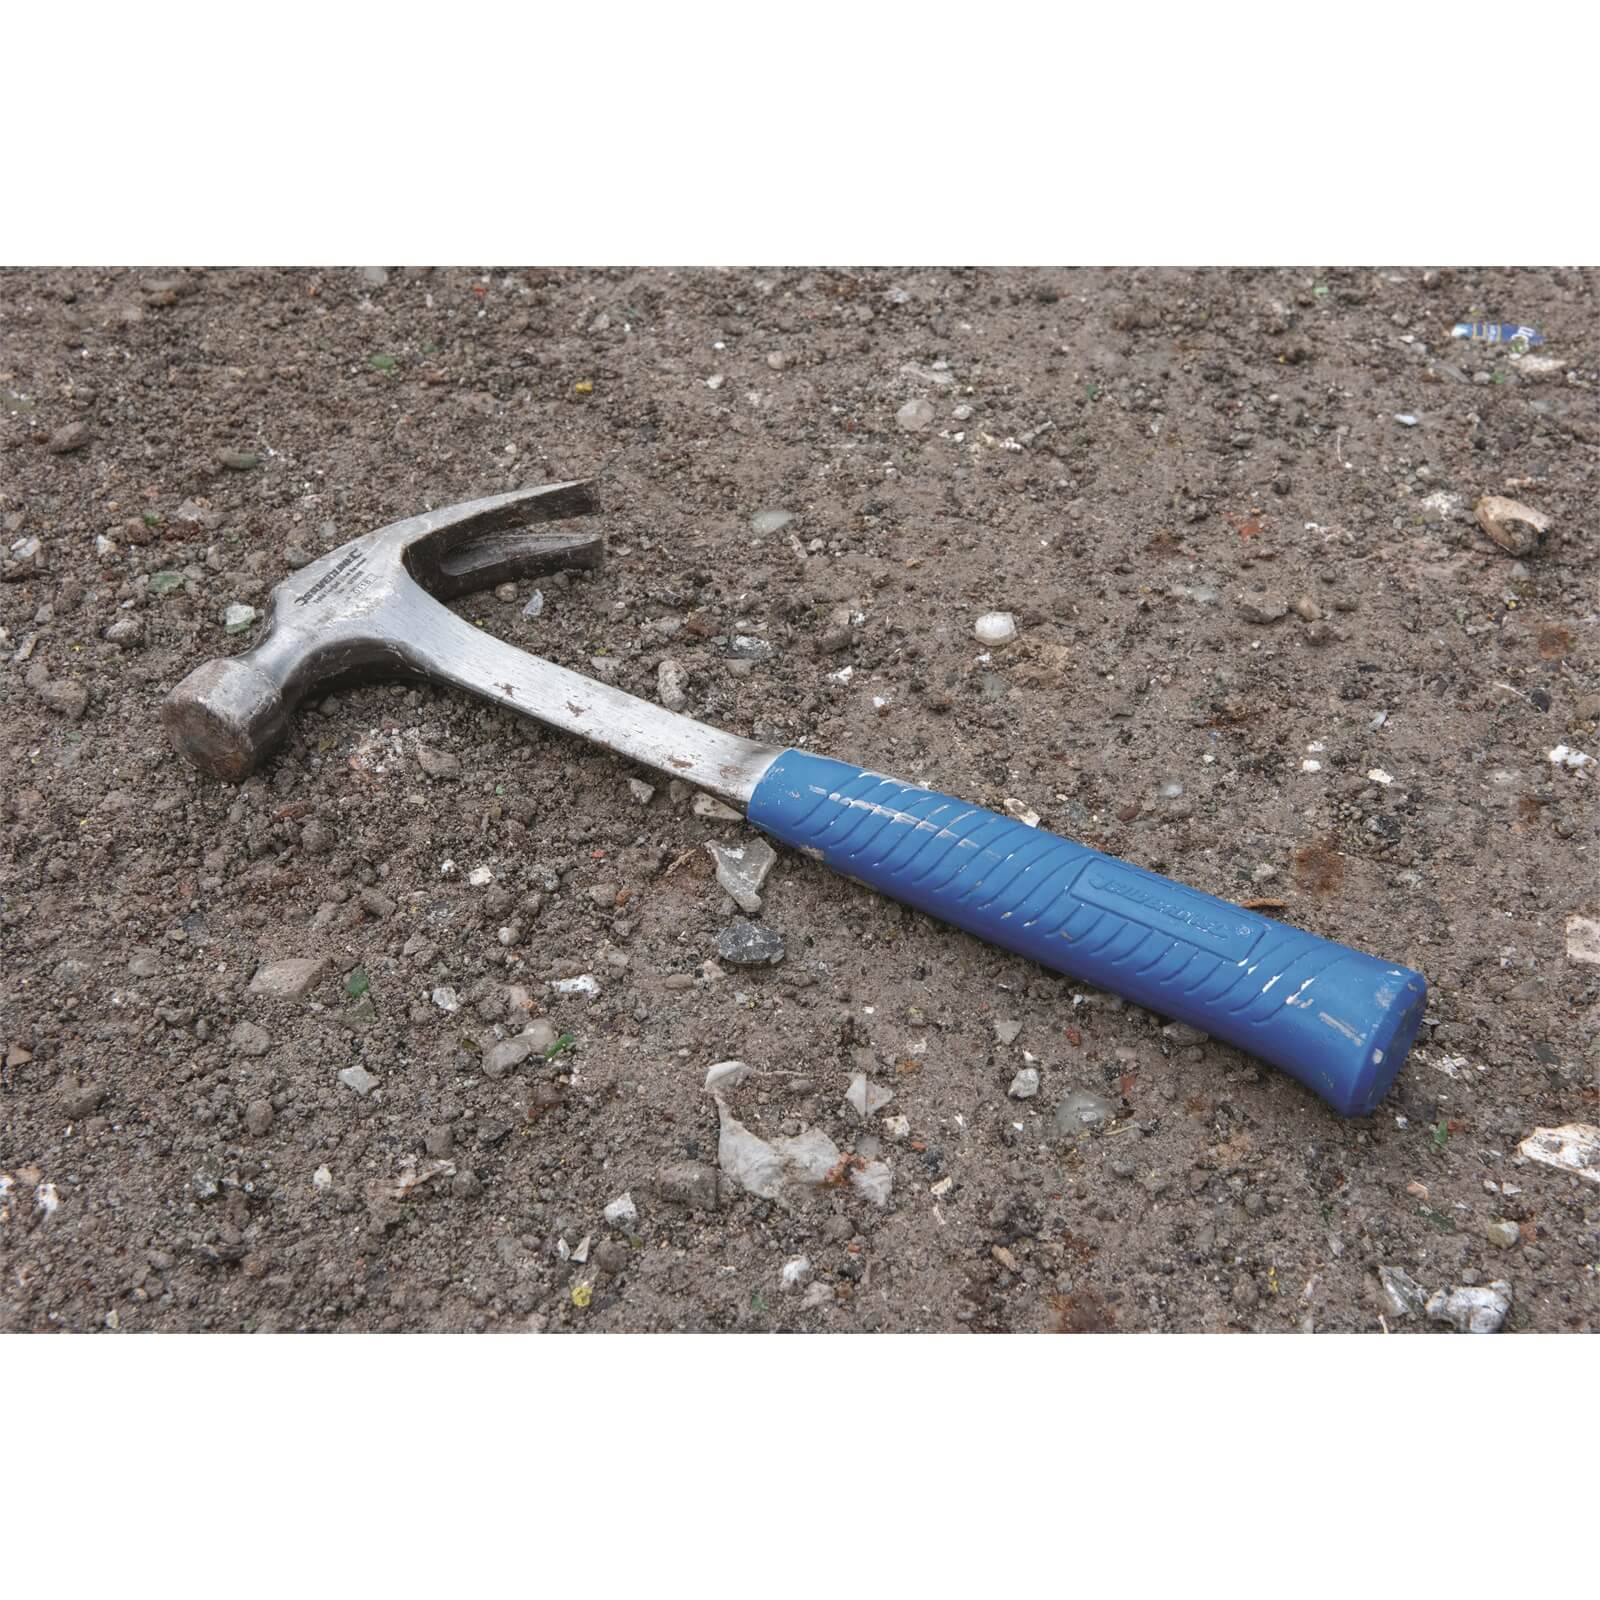 Silverline Solid Forged Claw Hammer - 16oz (454g)